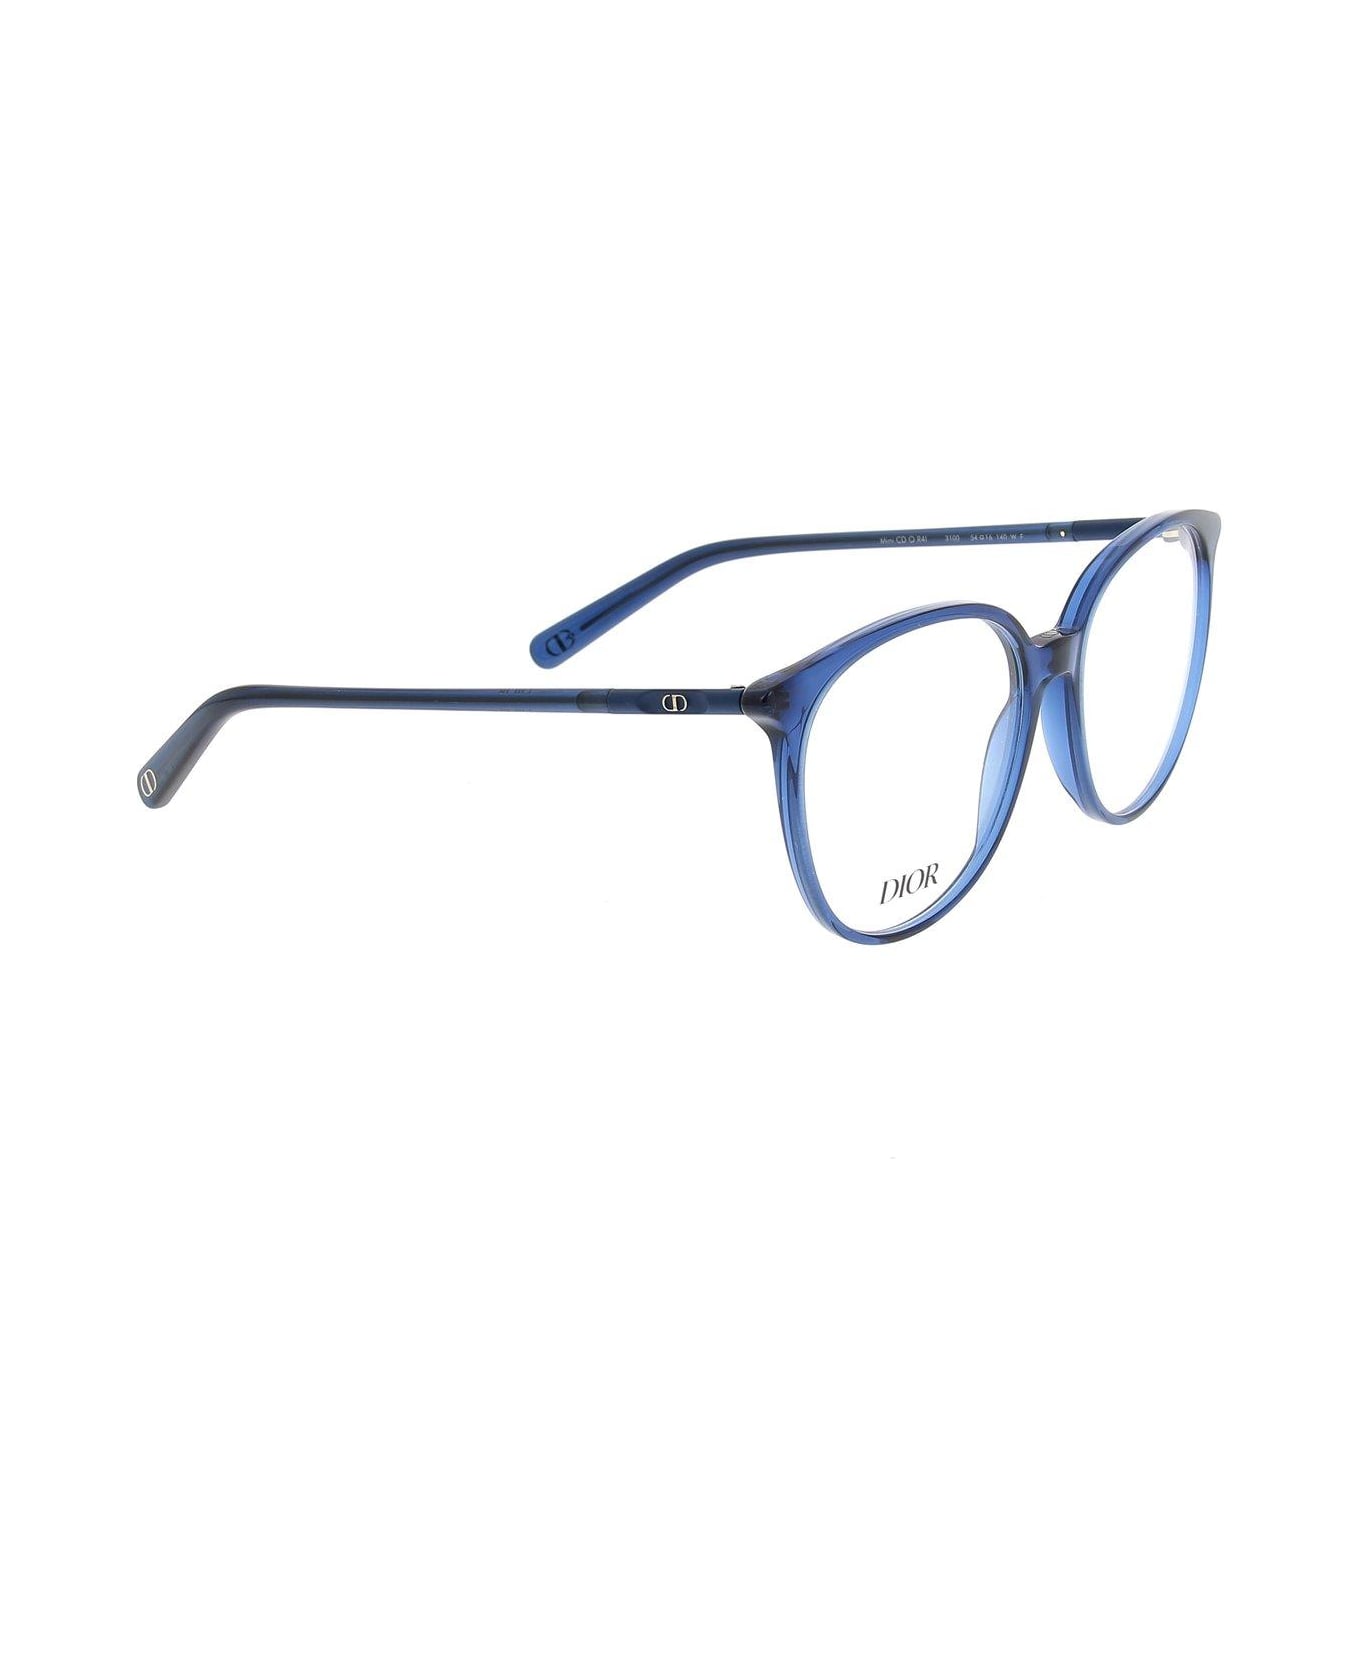 Dior Eyewear Round Frame Glasses - 3100